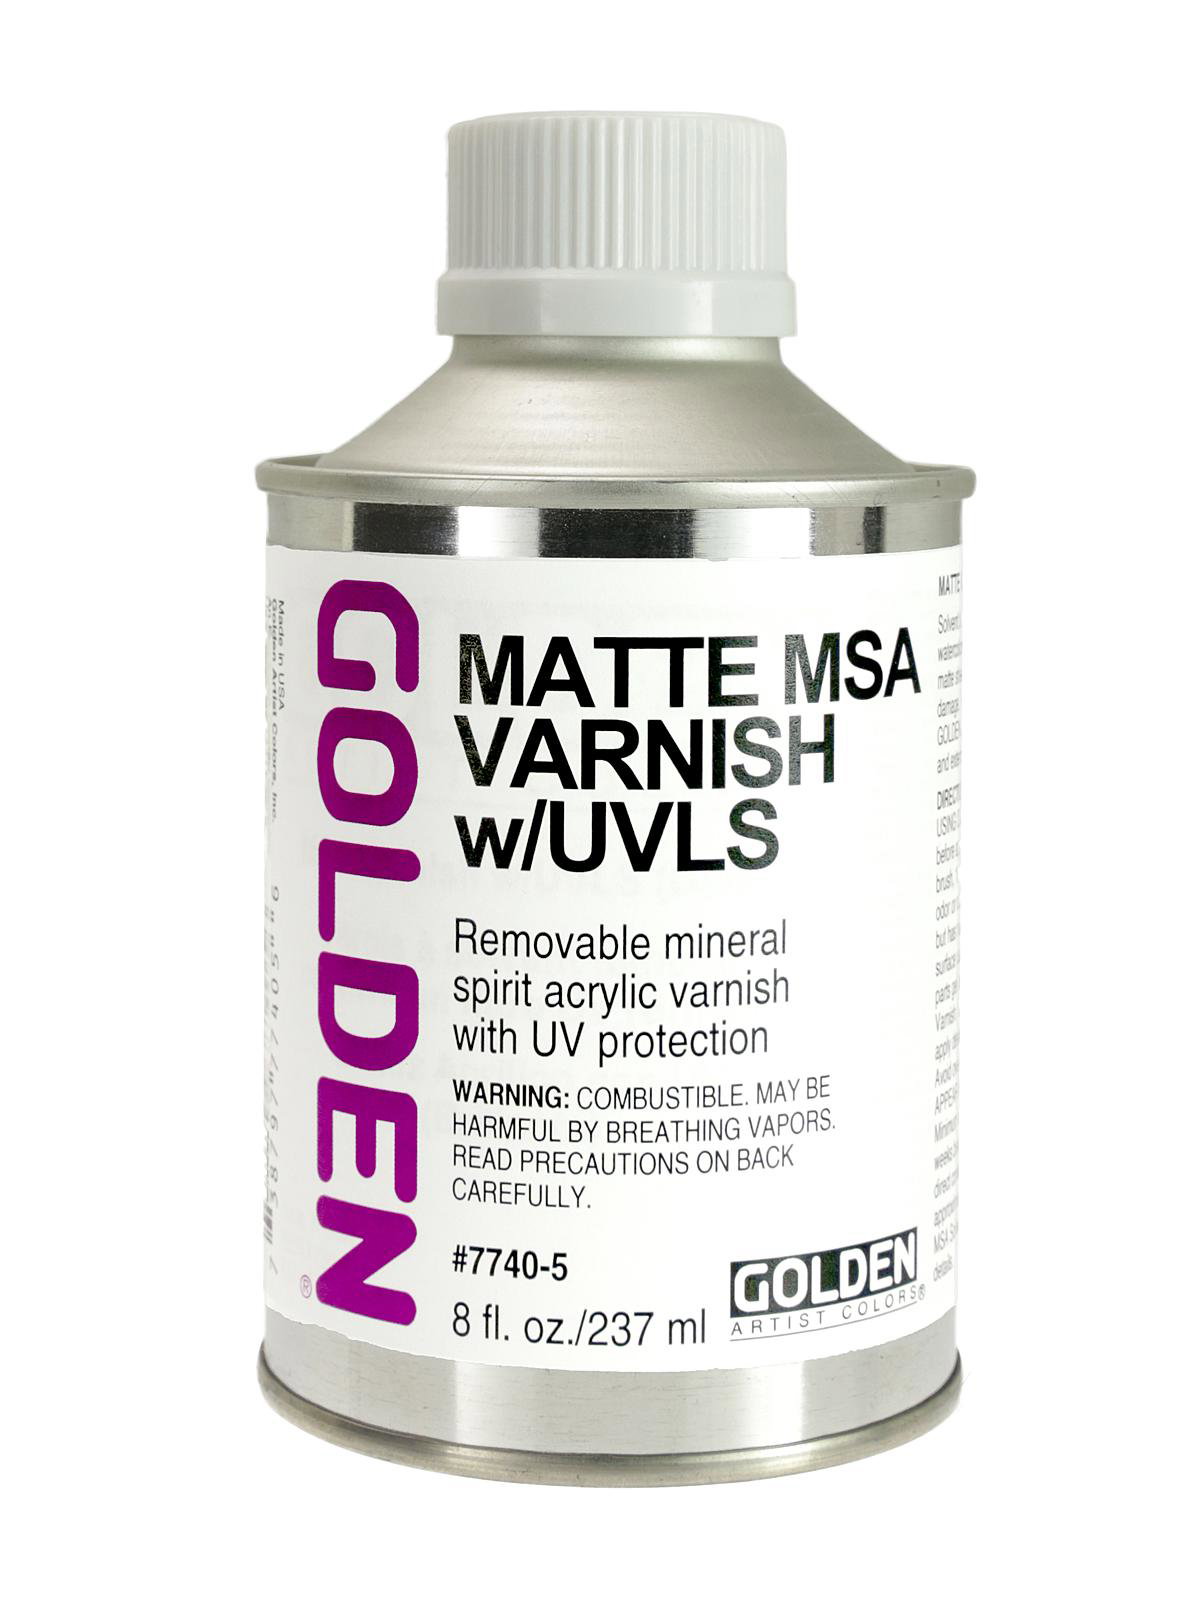 MSA (Mineral Spirit Acrylic) Varnish with UVLS